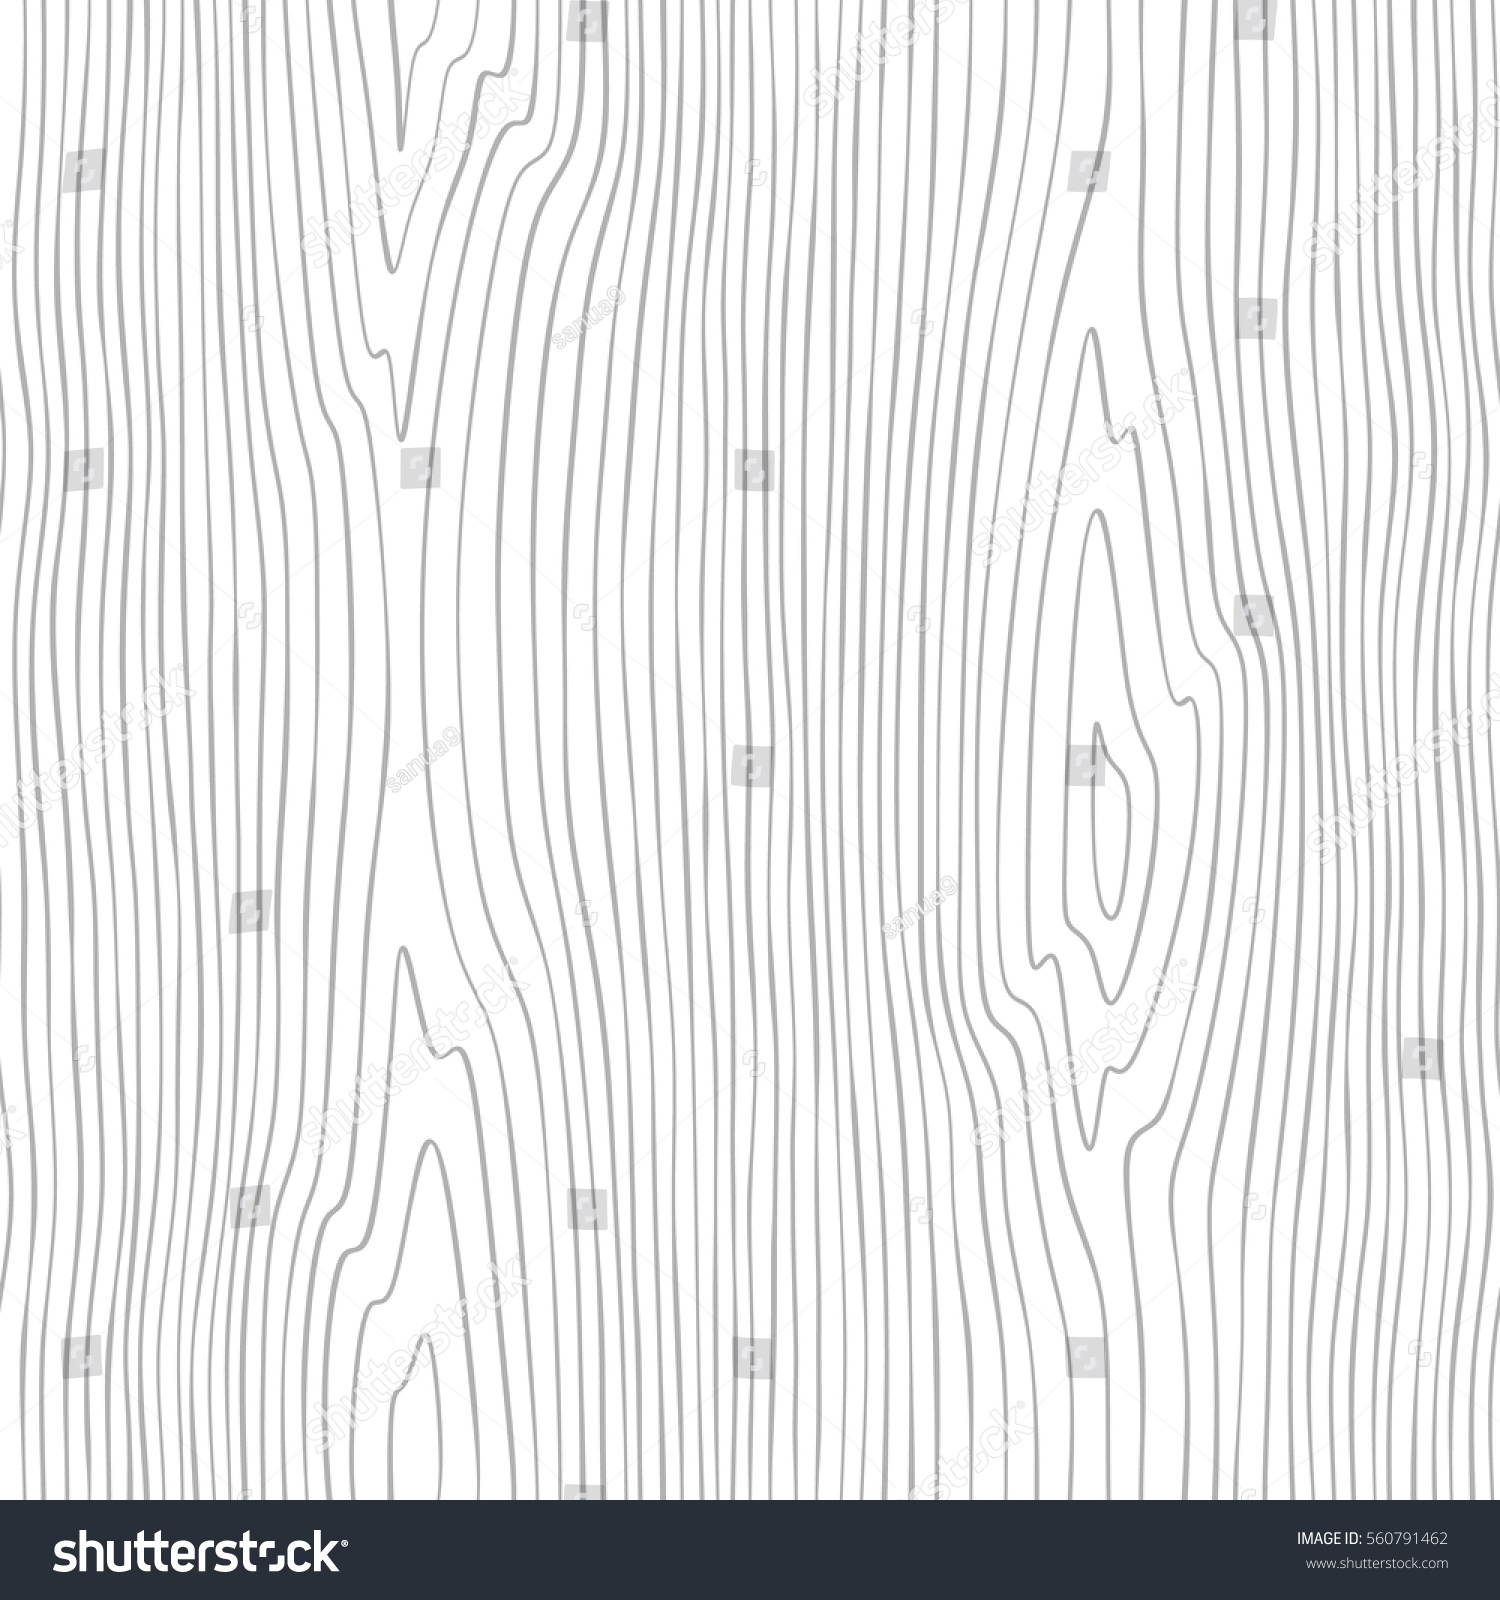 Seamless Wooden Pattern Wood Grain Texture Stock Vector 560791462 ...